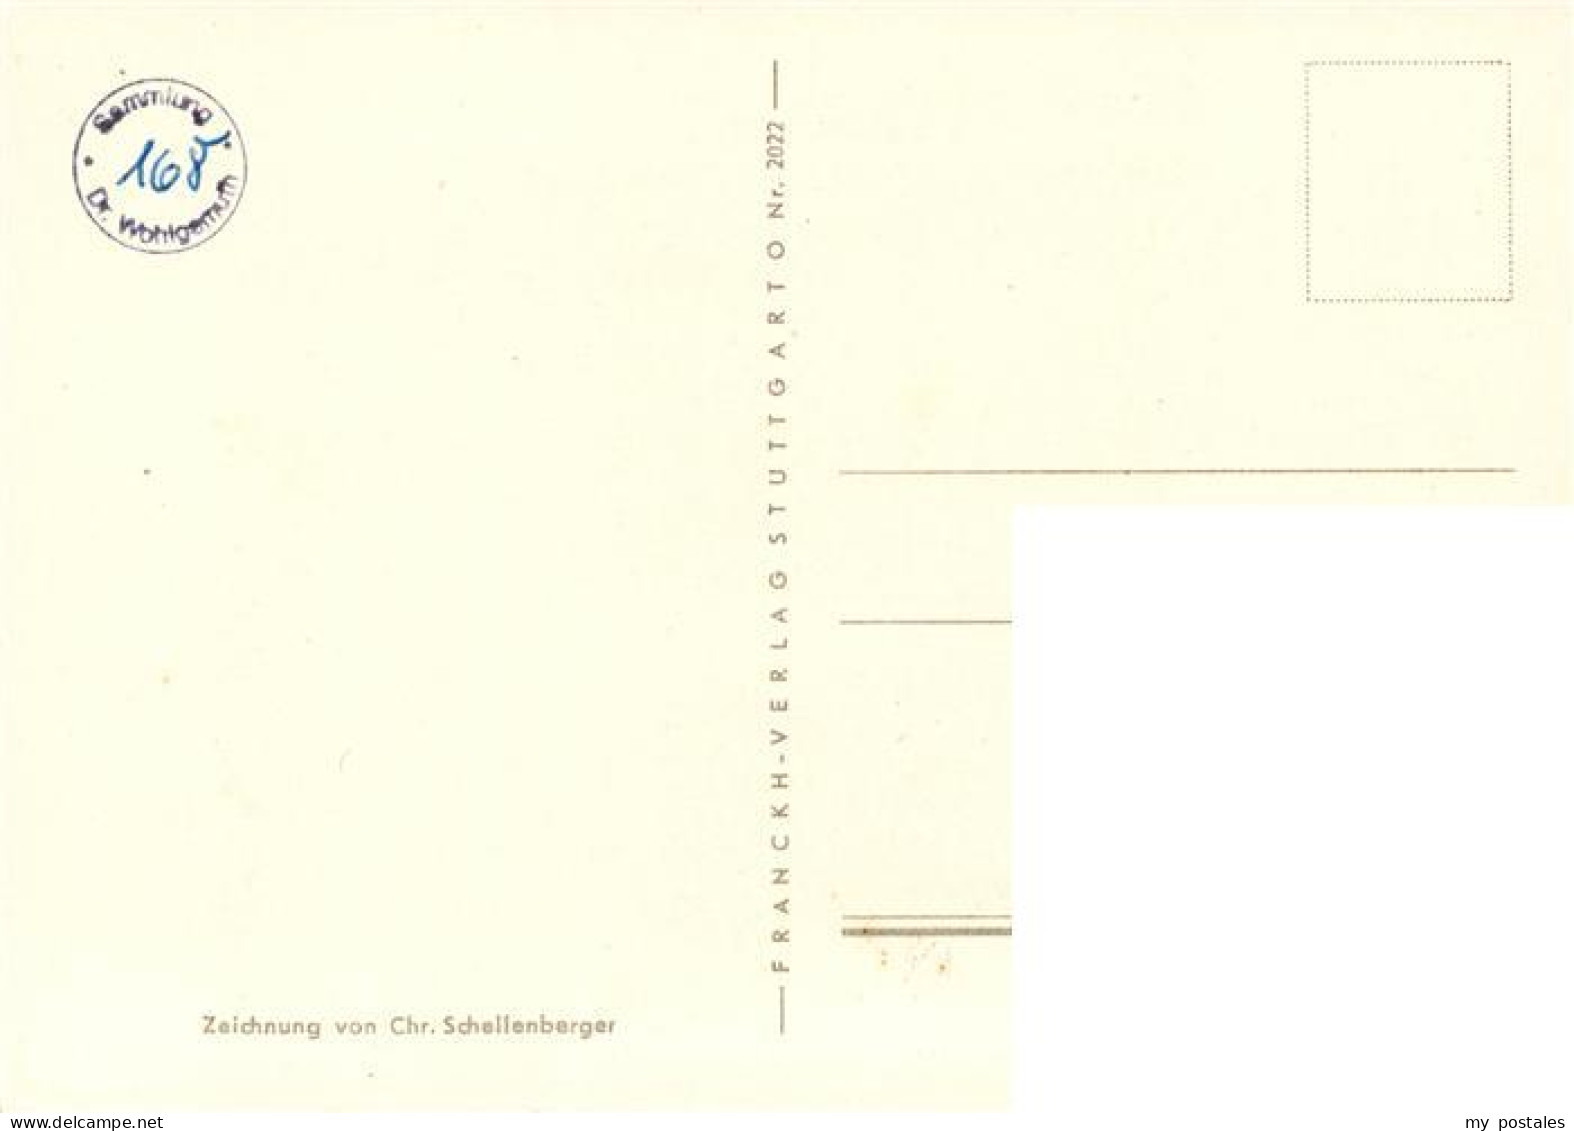 73905573 Stuttgart Stiftskirche Mit Schillerdenkmal Kuenstlerkarte - Stuttgart